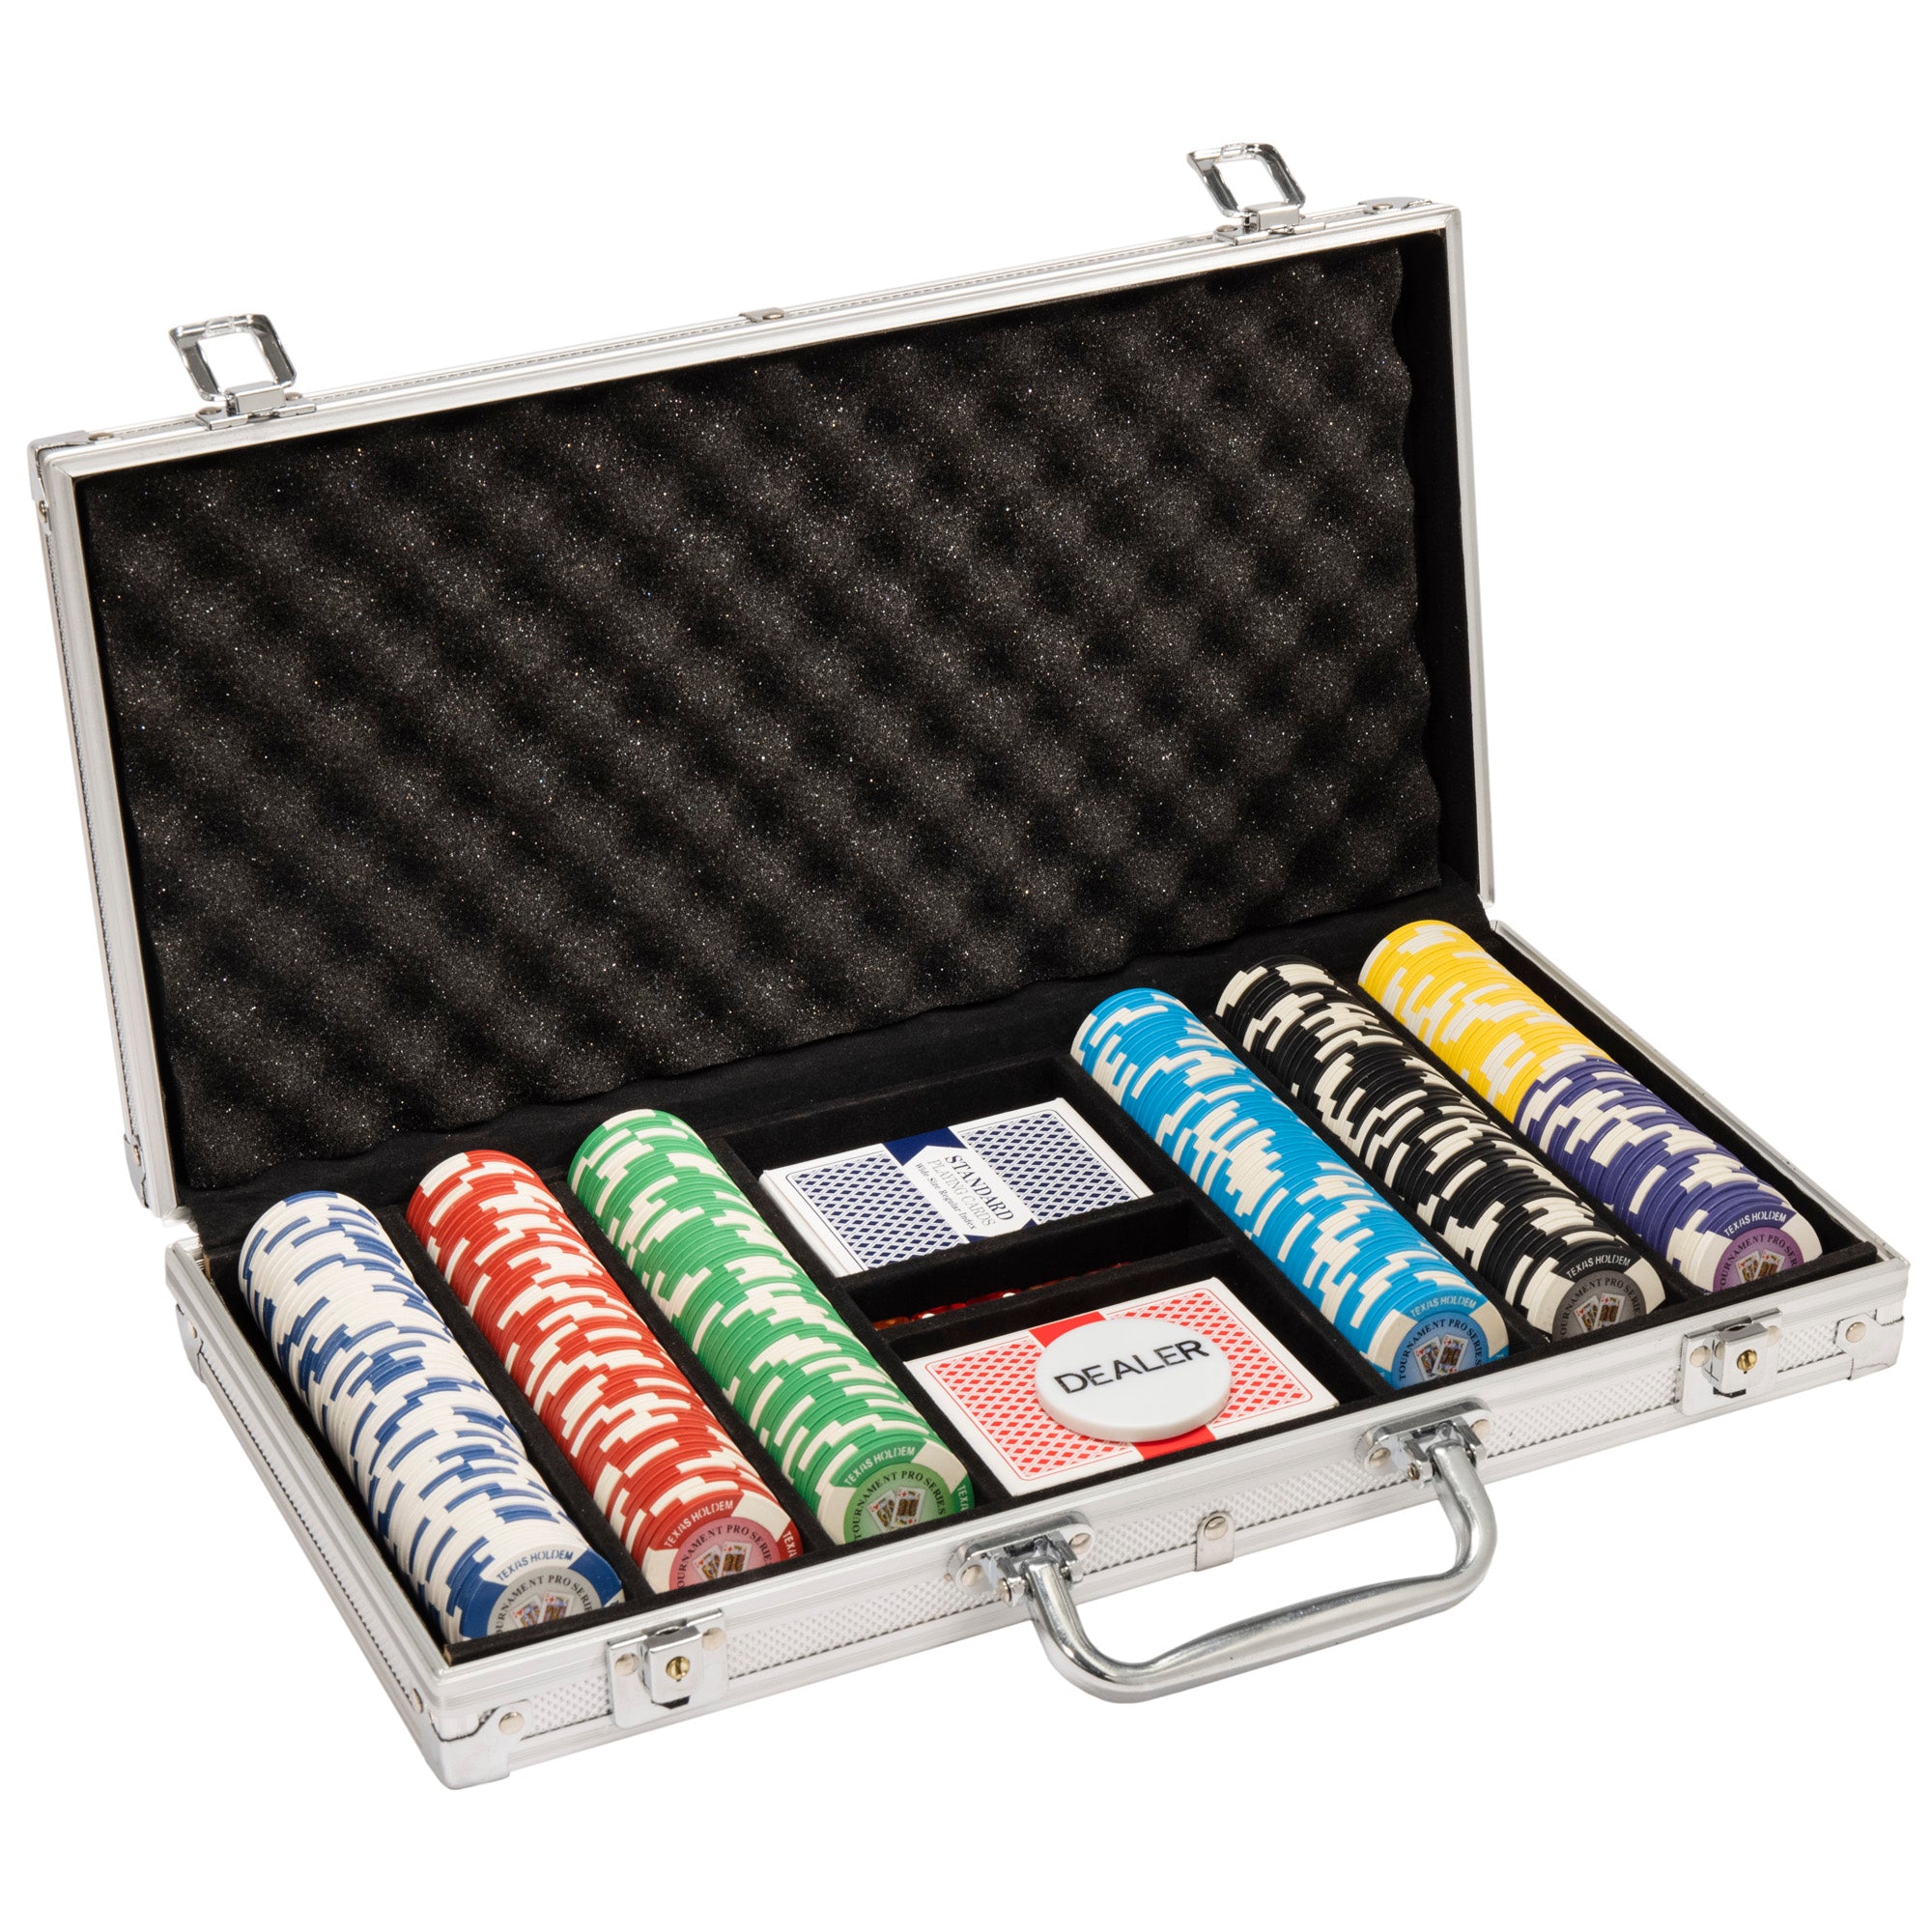 Tournament Pro 11.5-gram Poker Chip Set in Aluminum Case (300 Count)